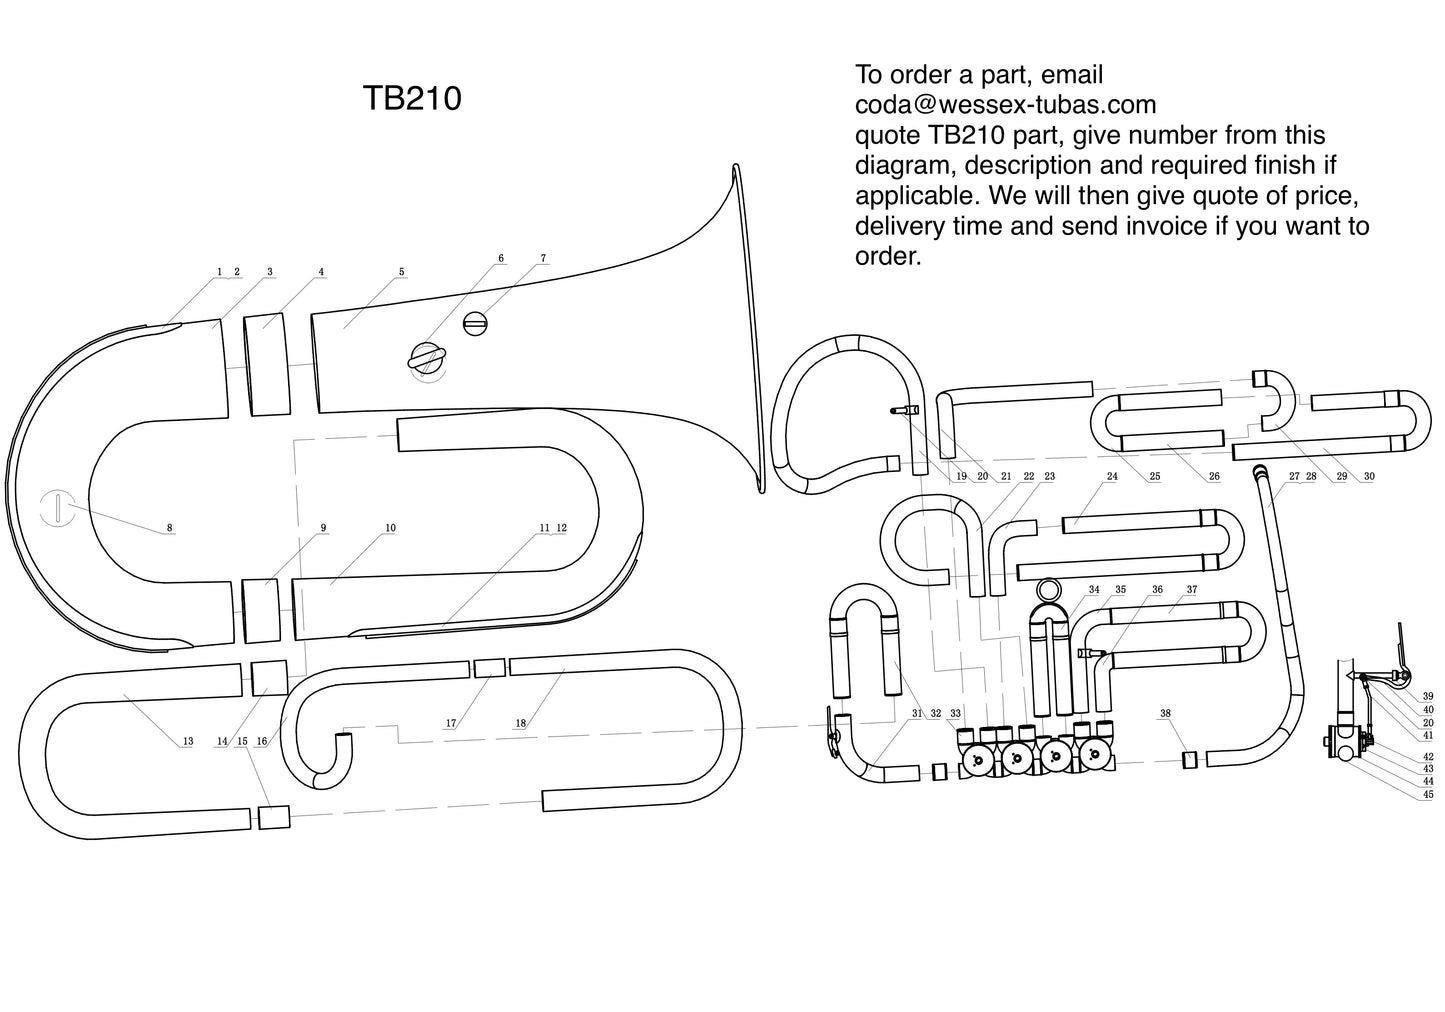 BBb Overture Tuba - TB210